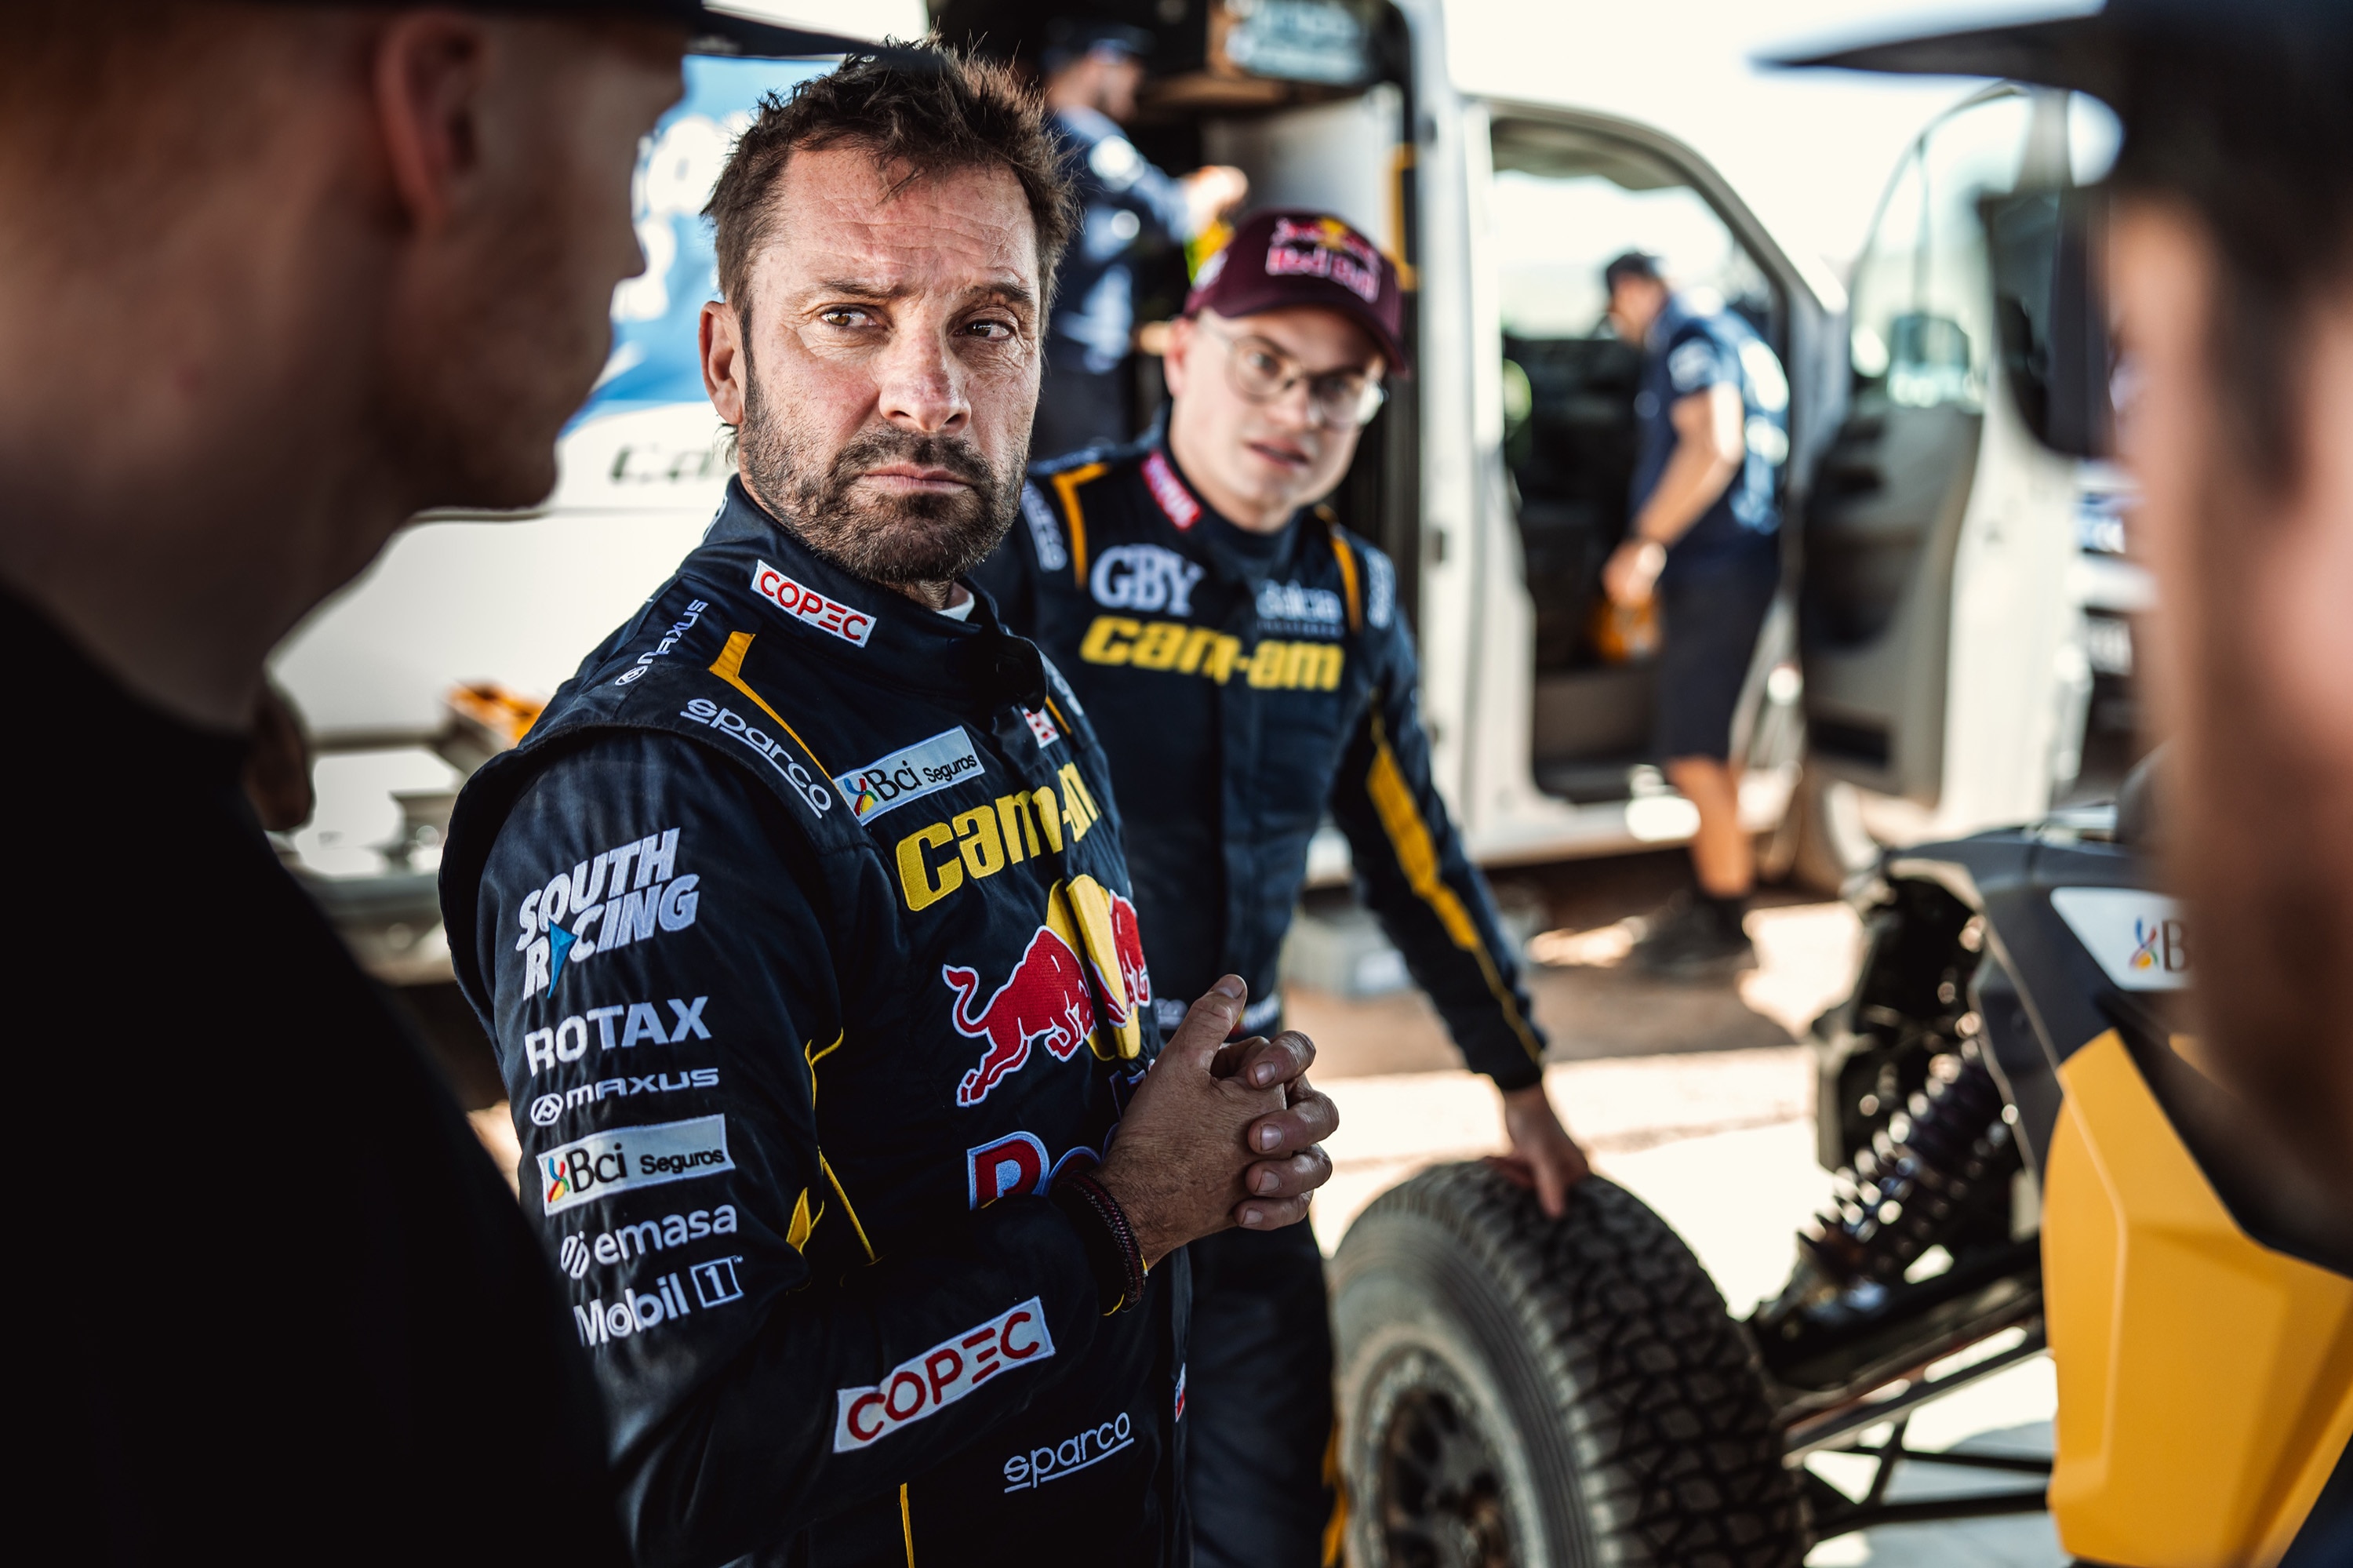 Chaleco Lopez preparing for the Dakar Rally